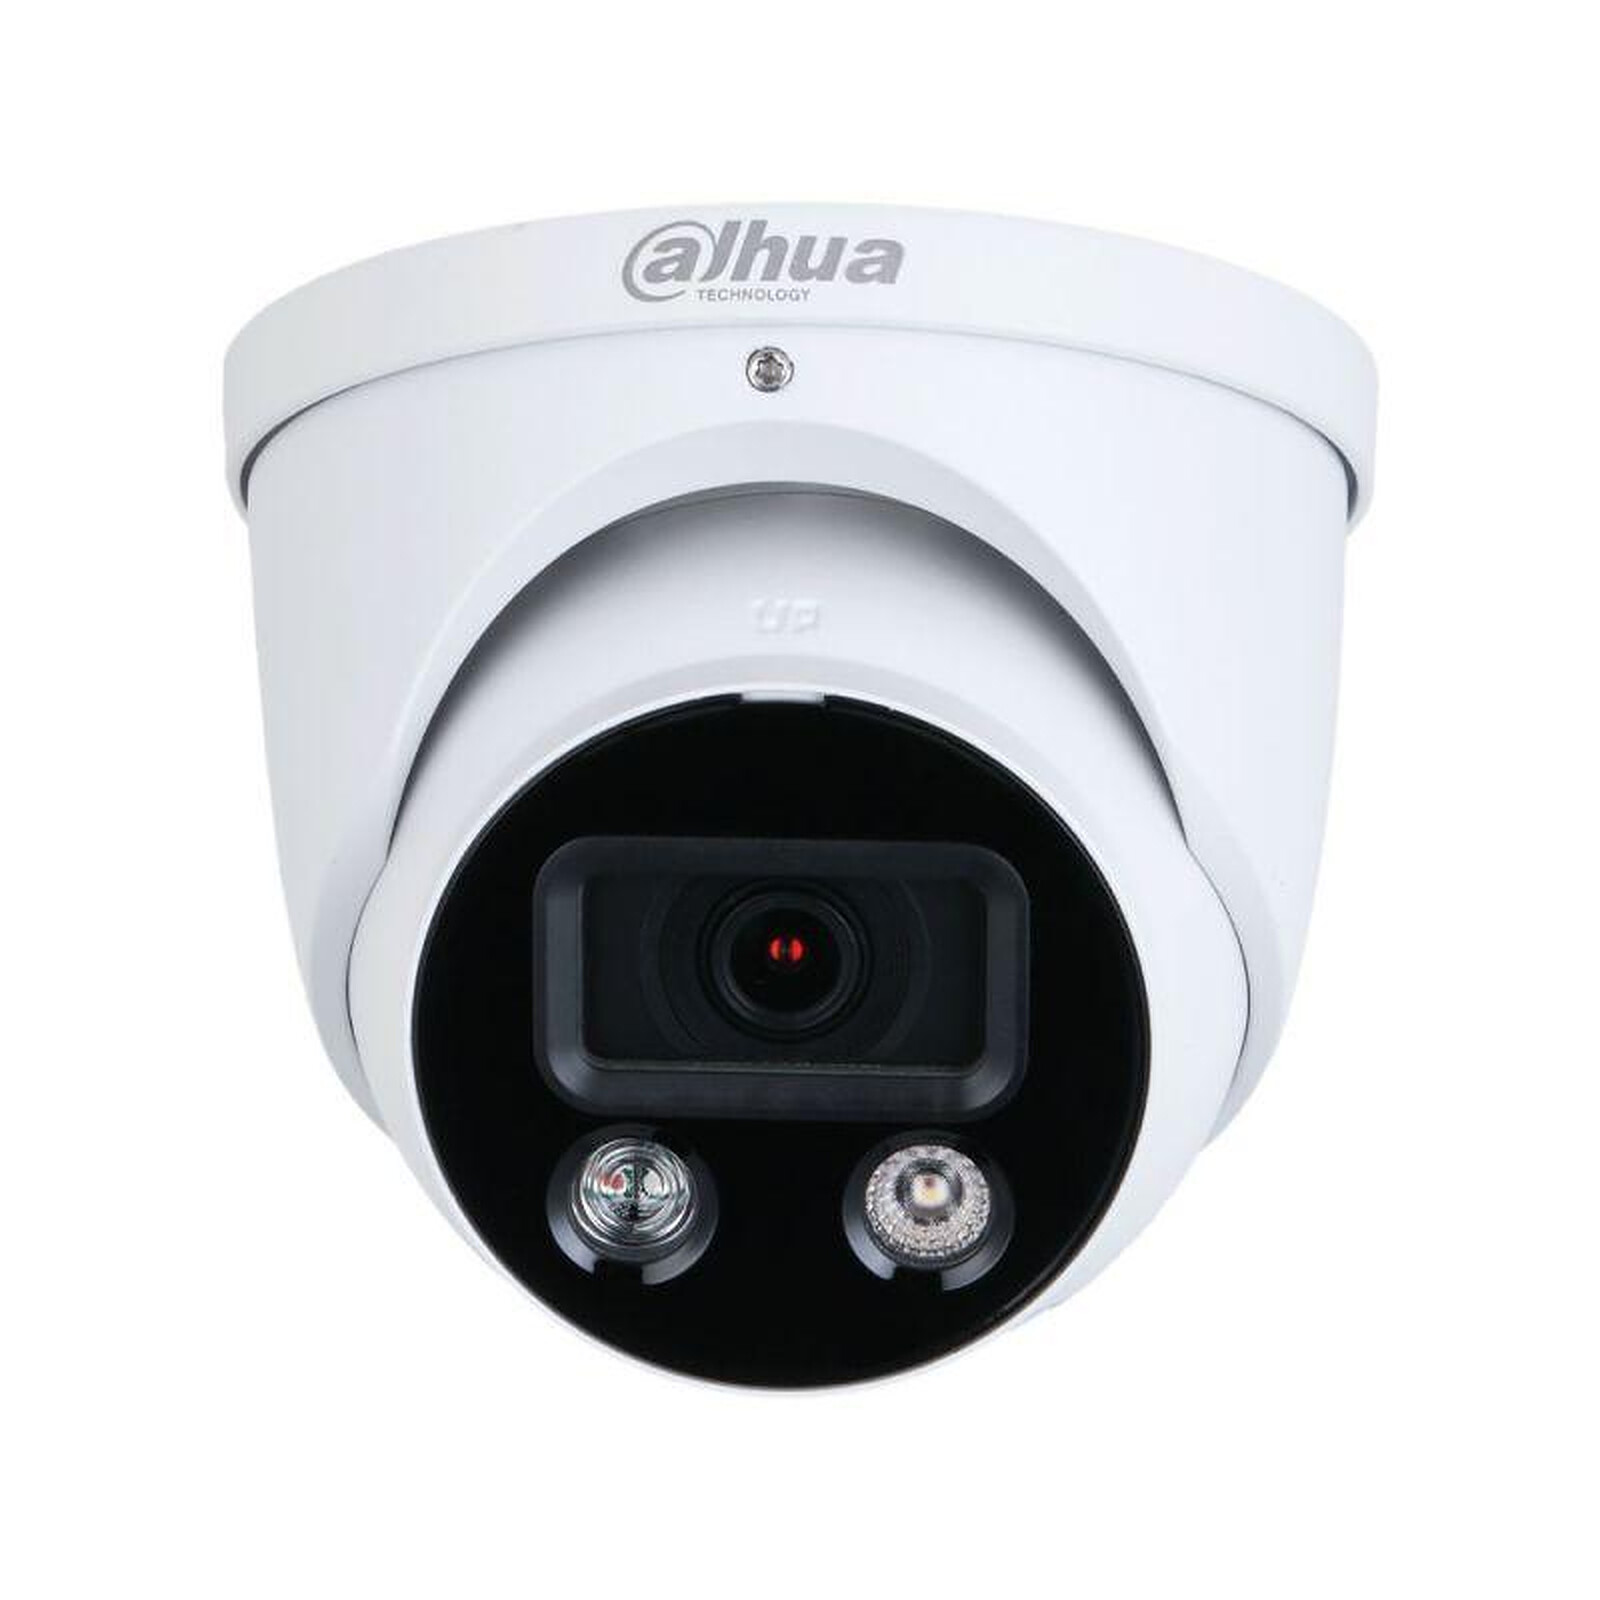 Imou - Caméra IP extérieur Turret PoE - Caméra de surveillance - LDLC